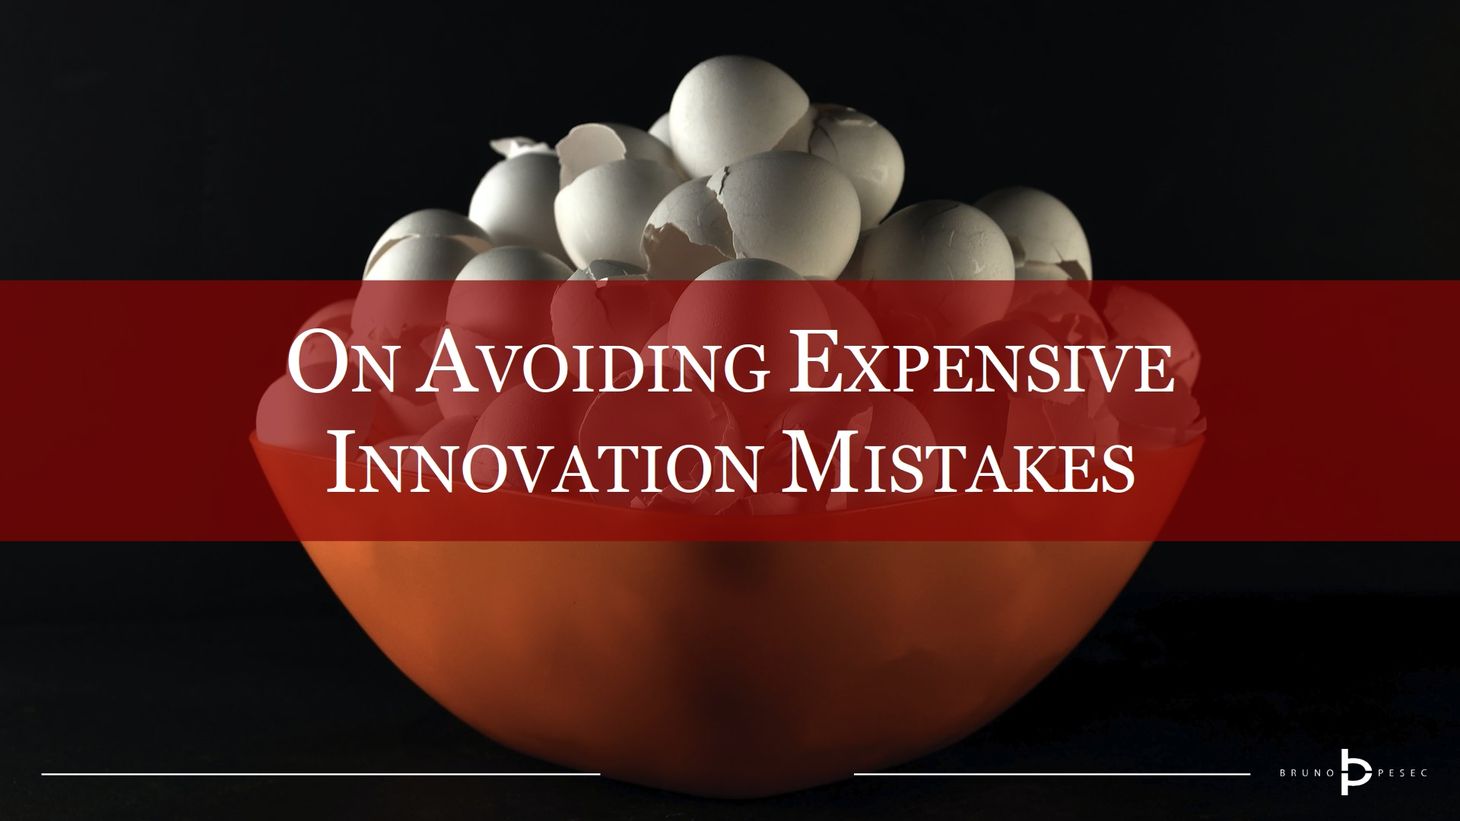 On avoiding expensive innovation mistakes